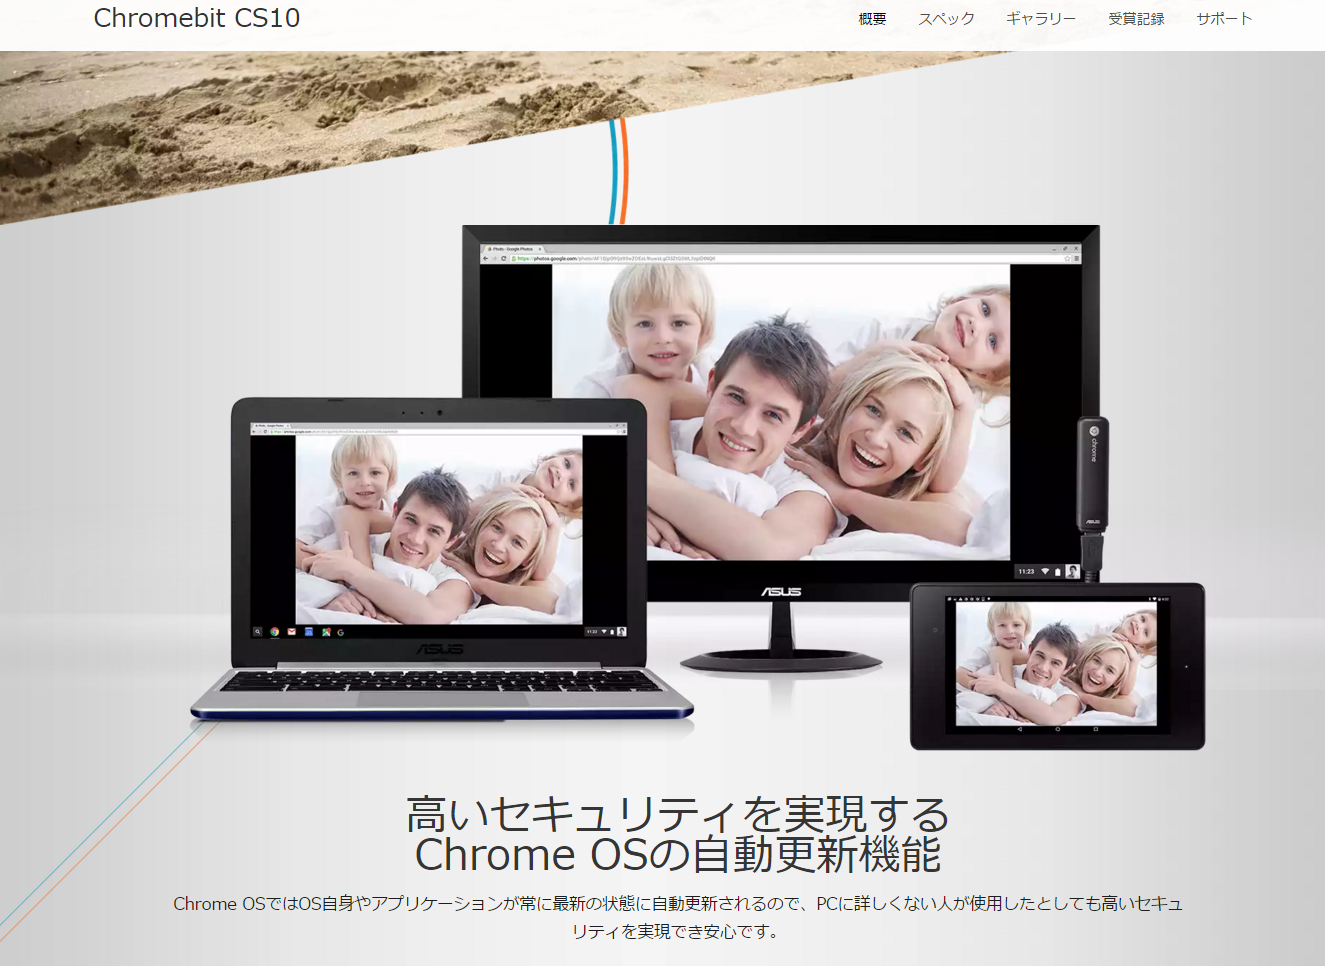 1153-201601_ASUS Chromebit CS10 04